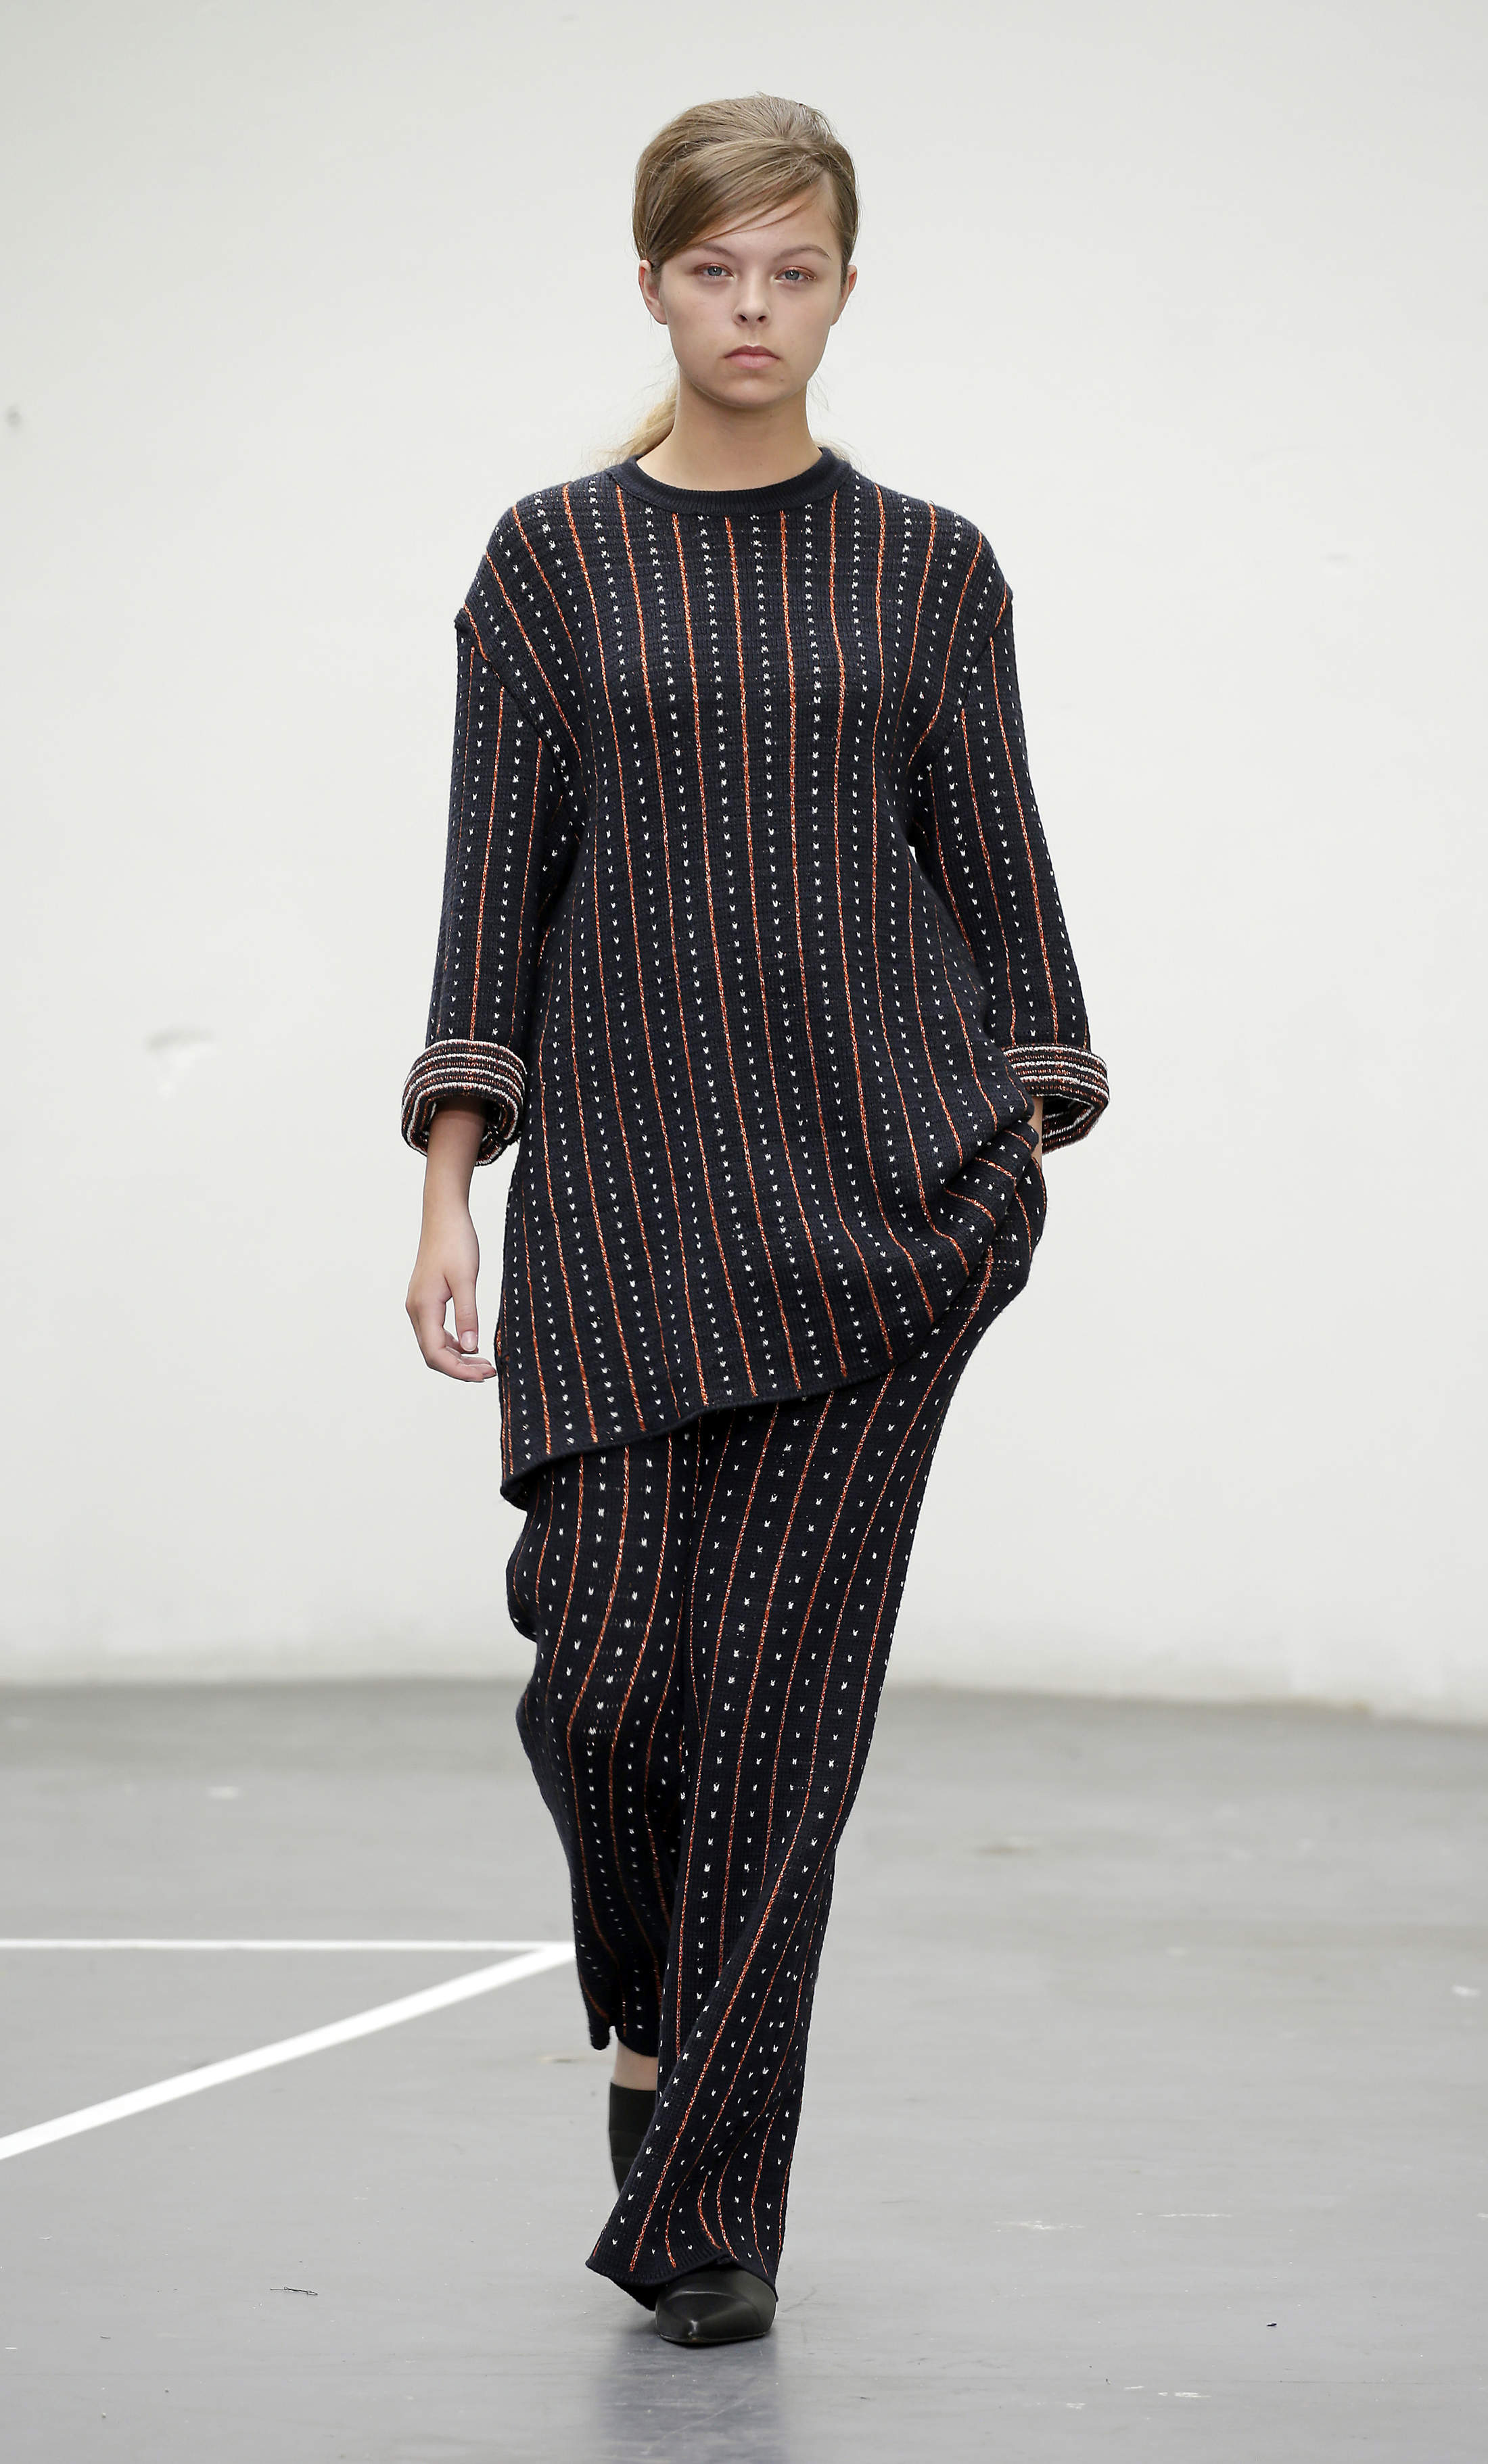 Joëlle van de Pavert | Arnhem Fashion Design